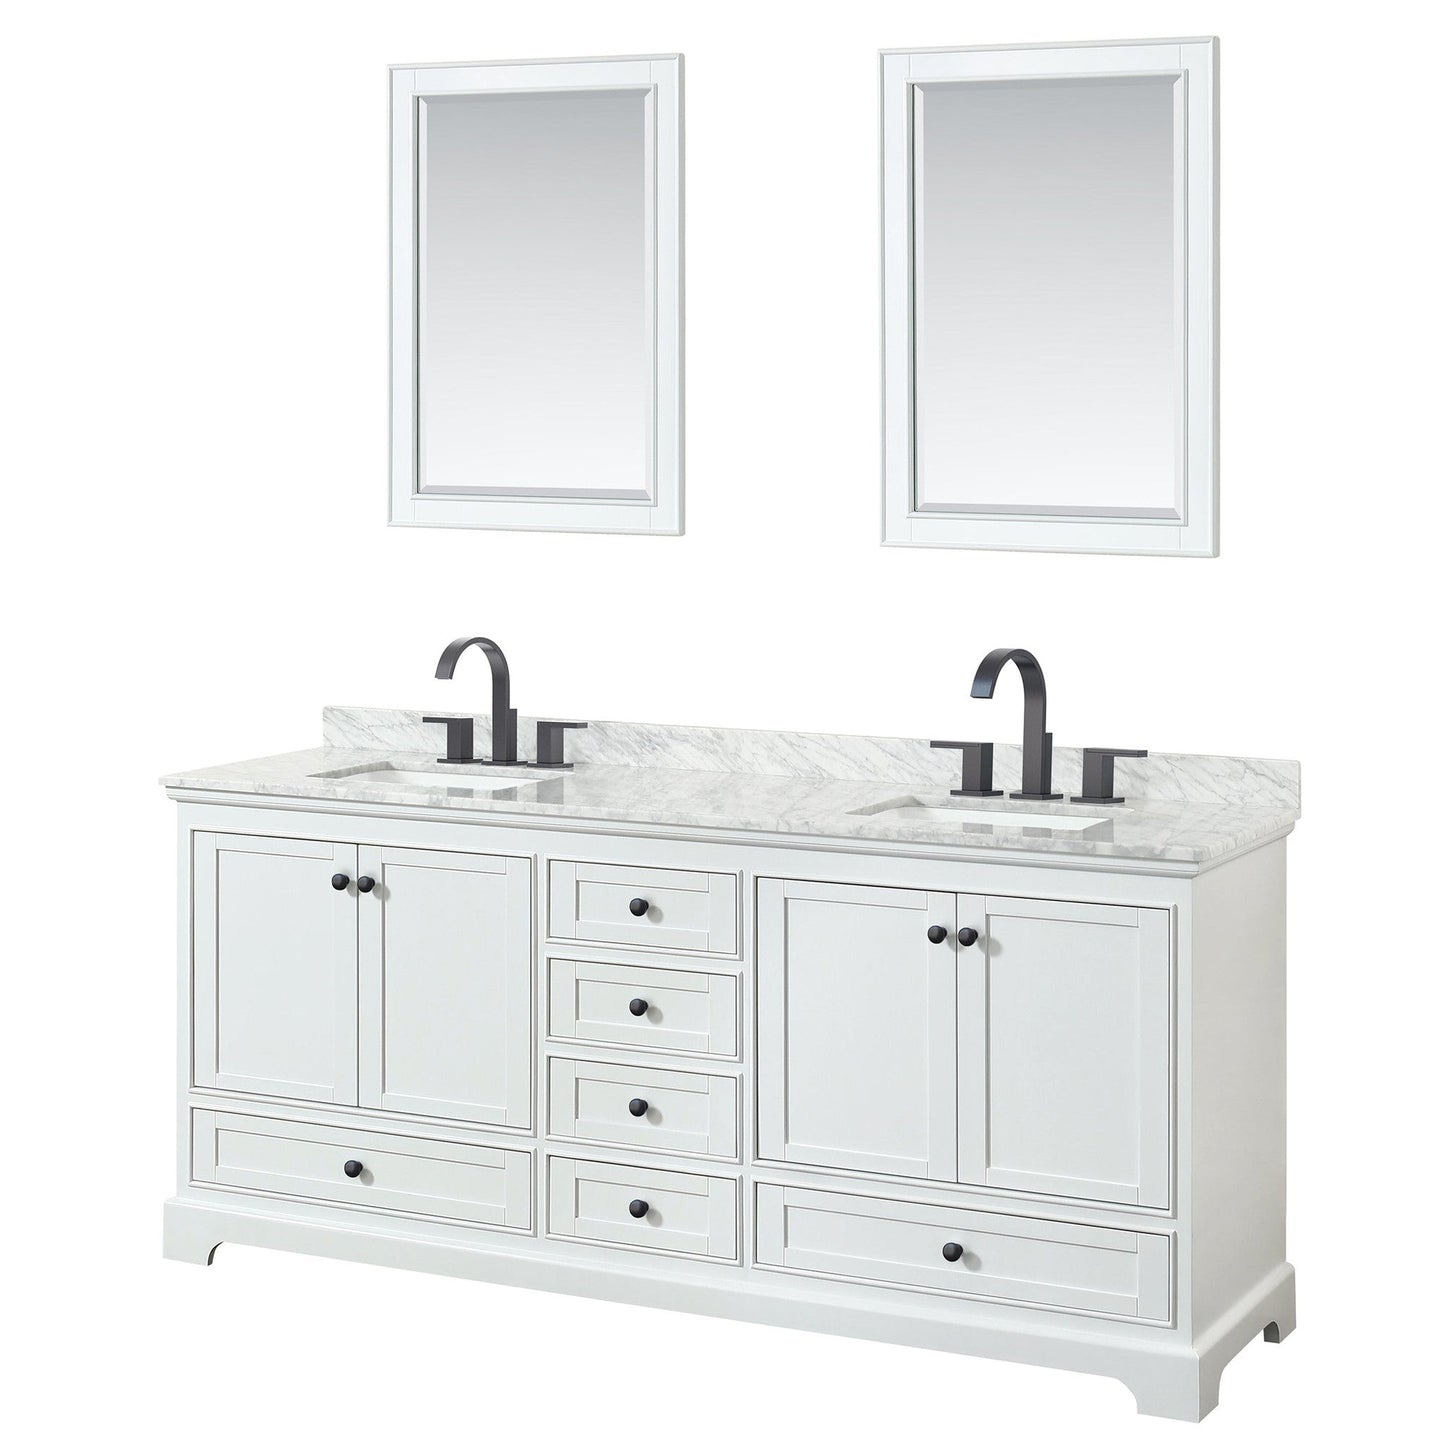 Deborah 80" Double Bathroom Vanity in White, White Carrara Marble Countertop, Undermount Square Sinks, Matte Black Trim, 24" Mirrors